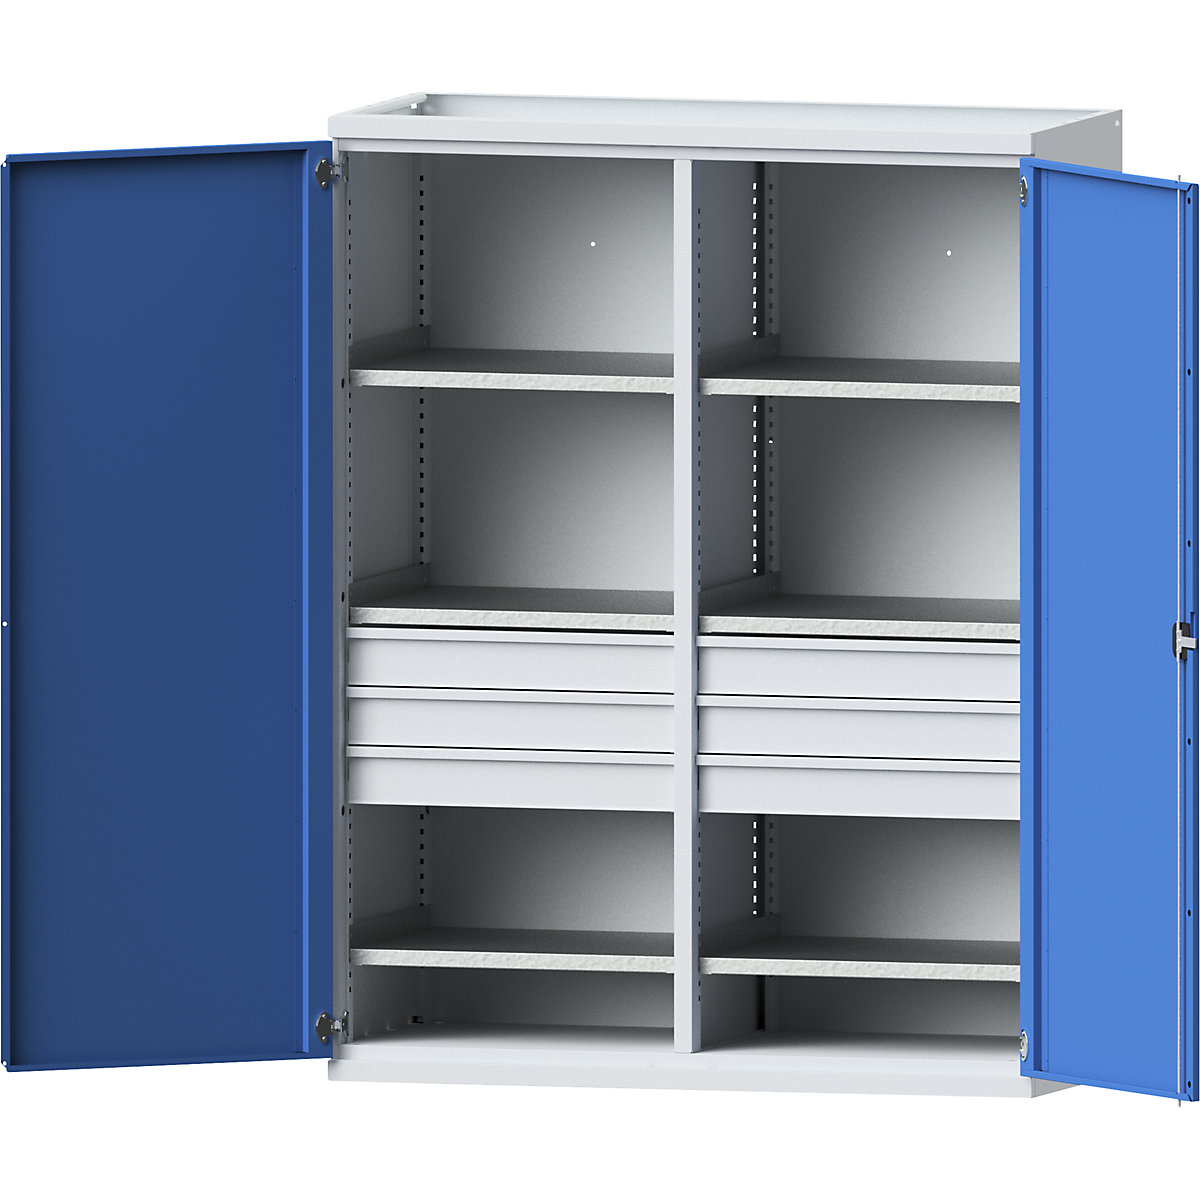 JUMBO heavy duty cupboard made of sheet steel – eurokraft pro, 6 shelves, 6 x 120 mm high drawers, light grey / light blue-3